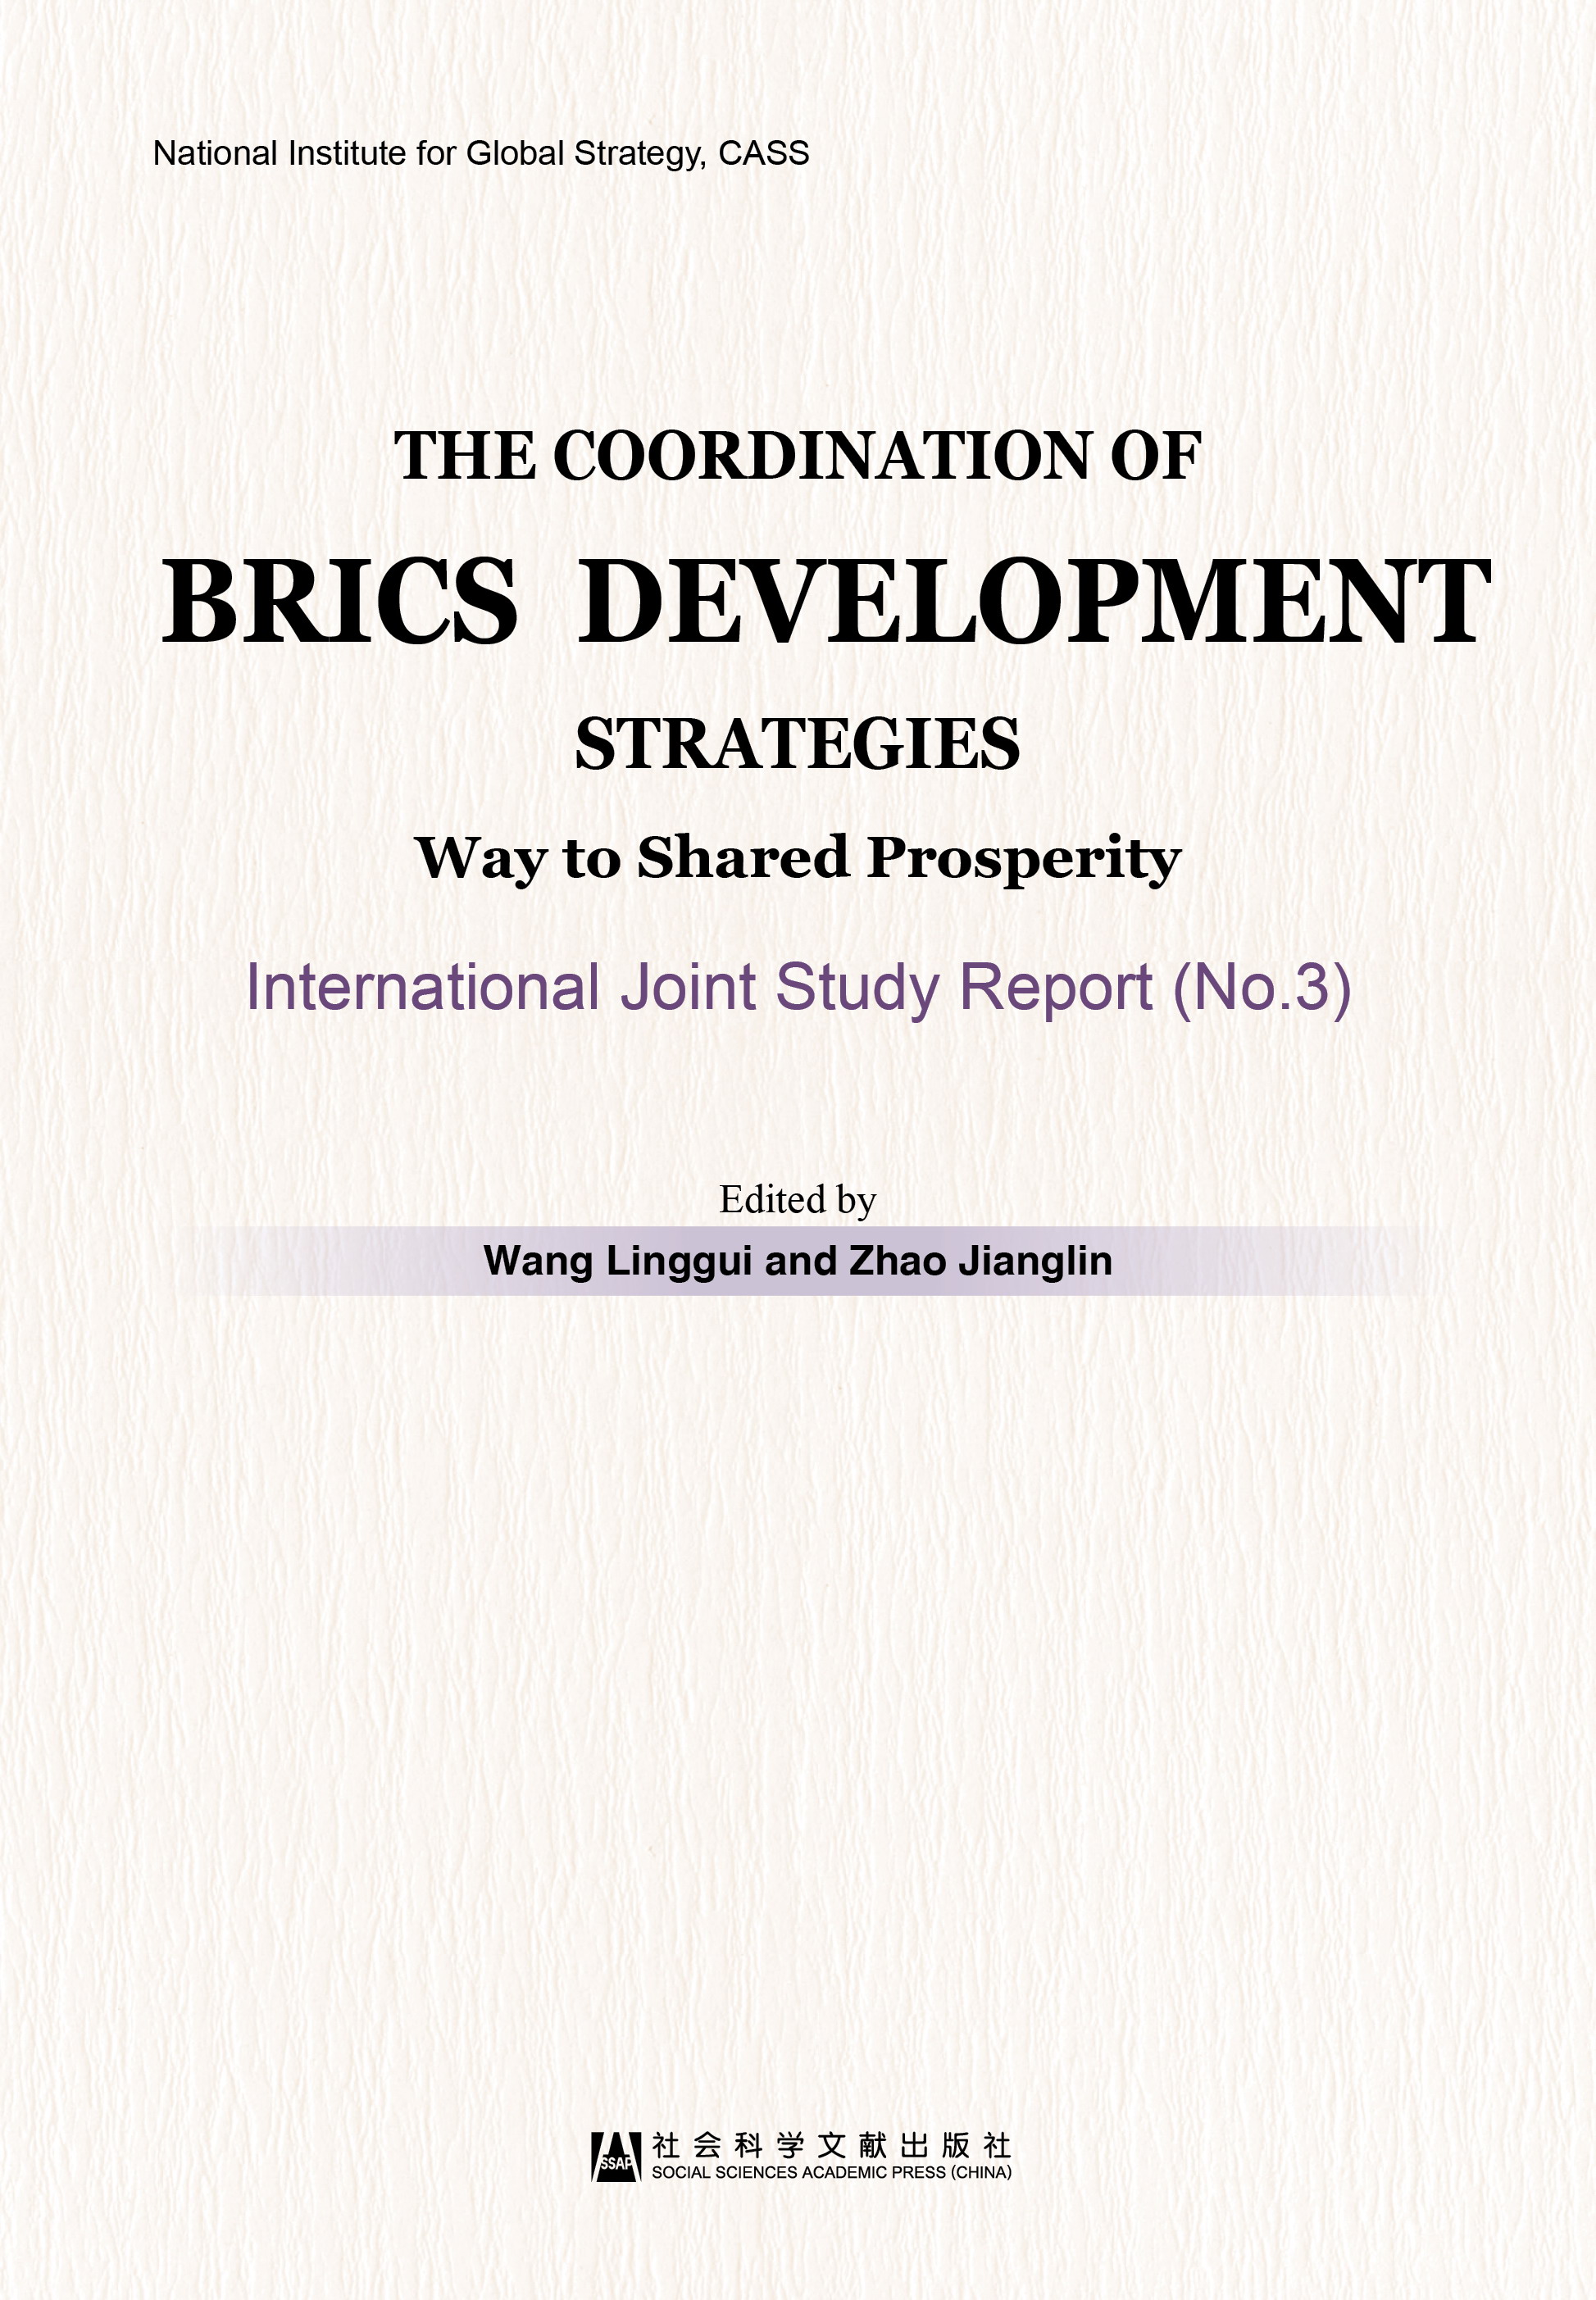 The Coordination of BRICS Development Strategies: Way to Shared Prosperity